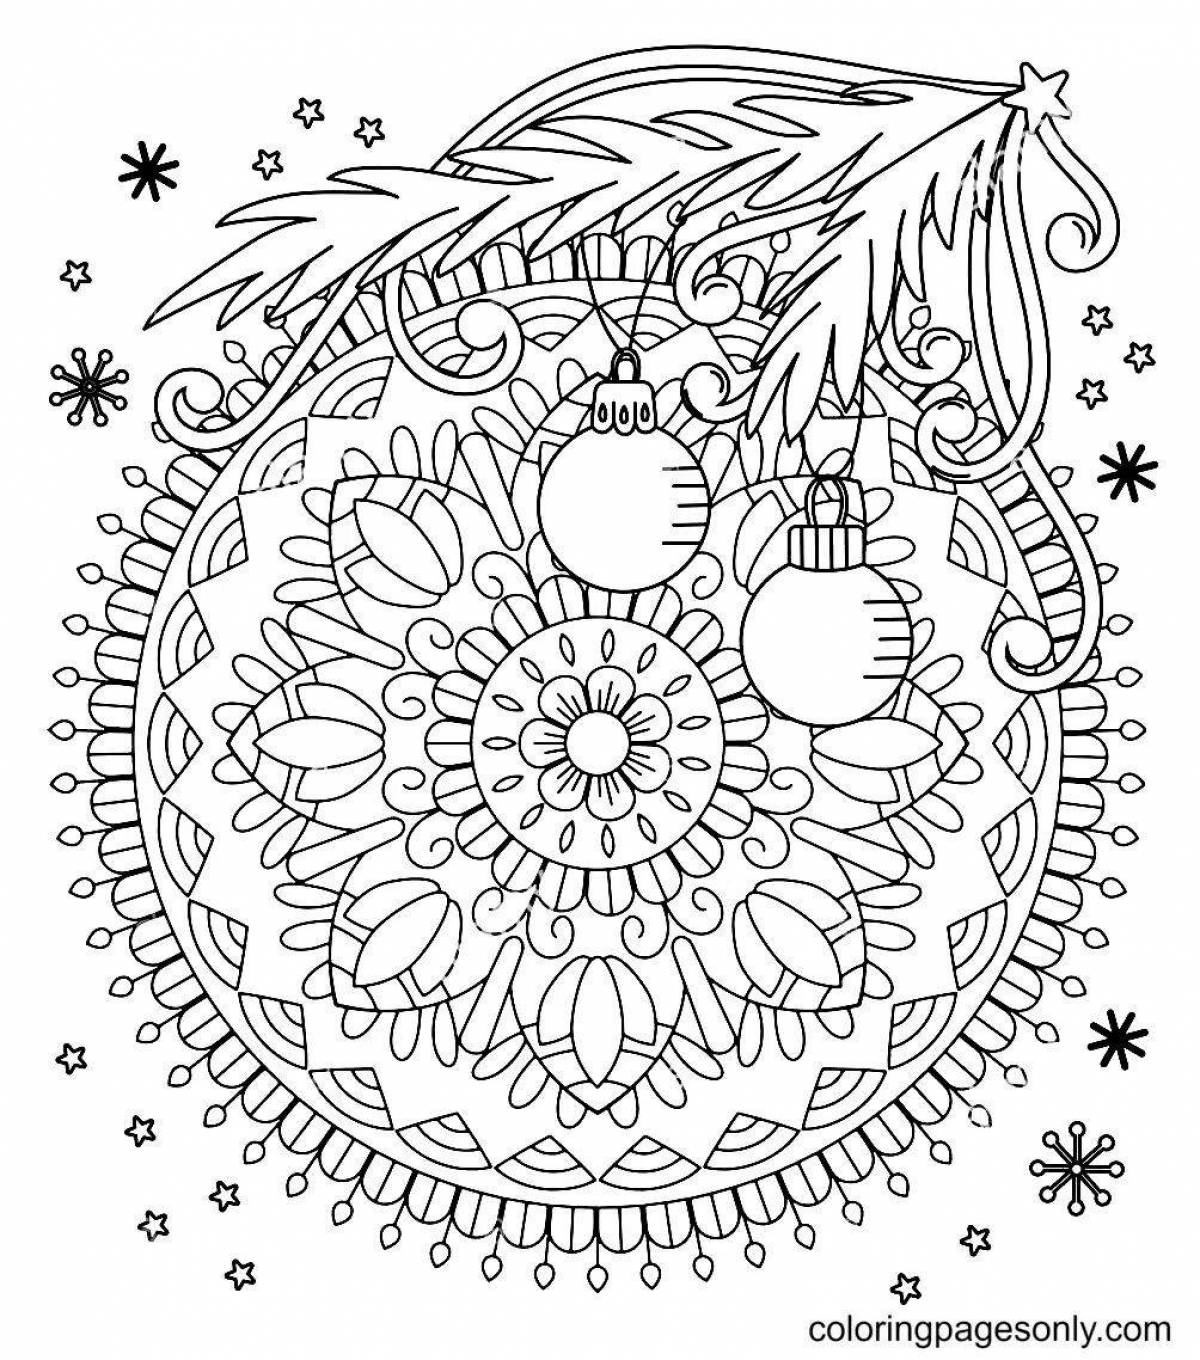 Merry Christmas mandala coloring book